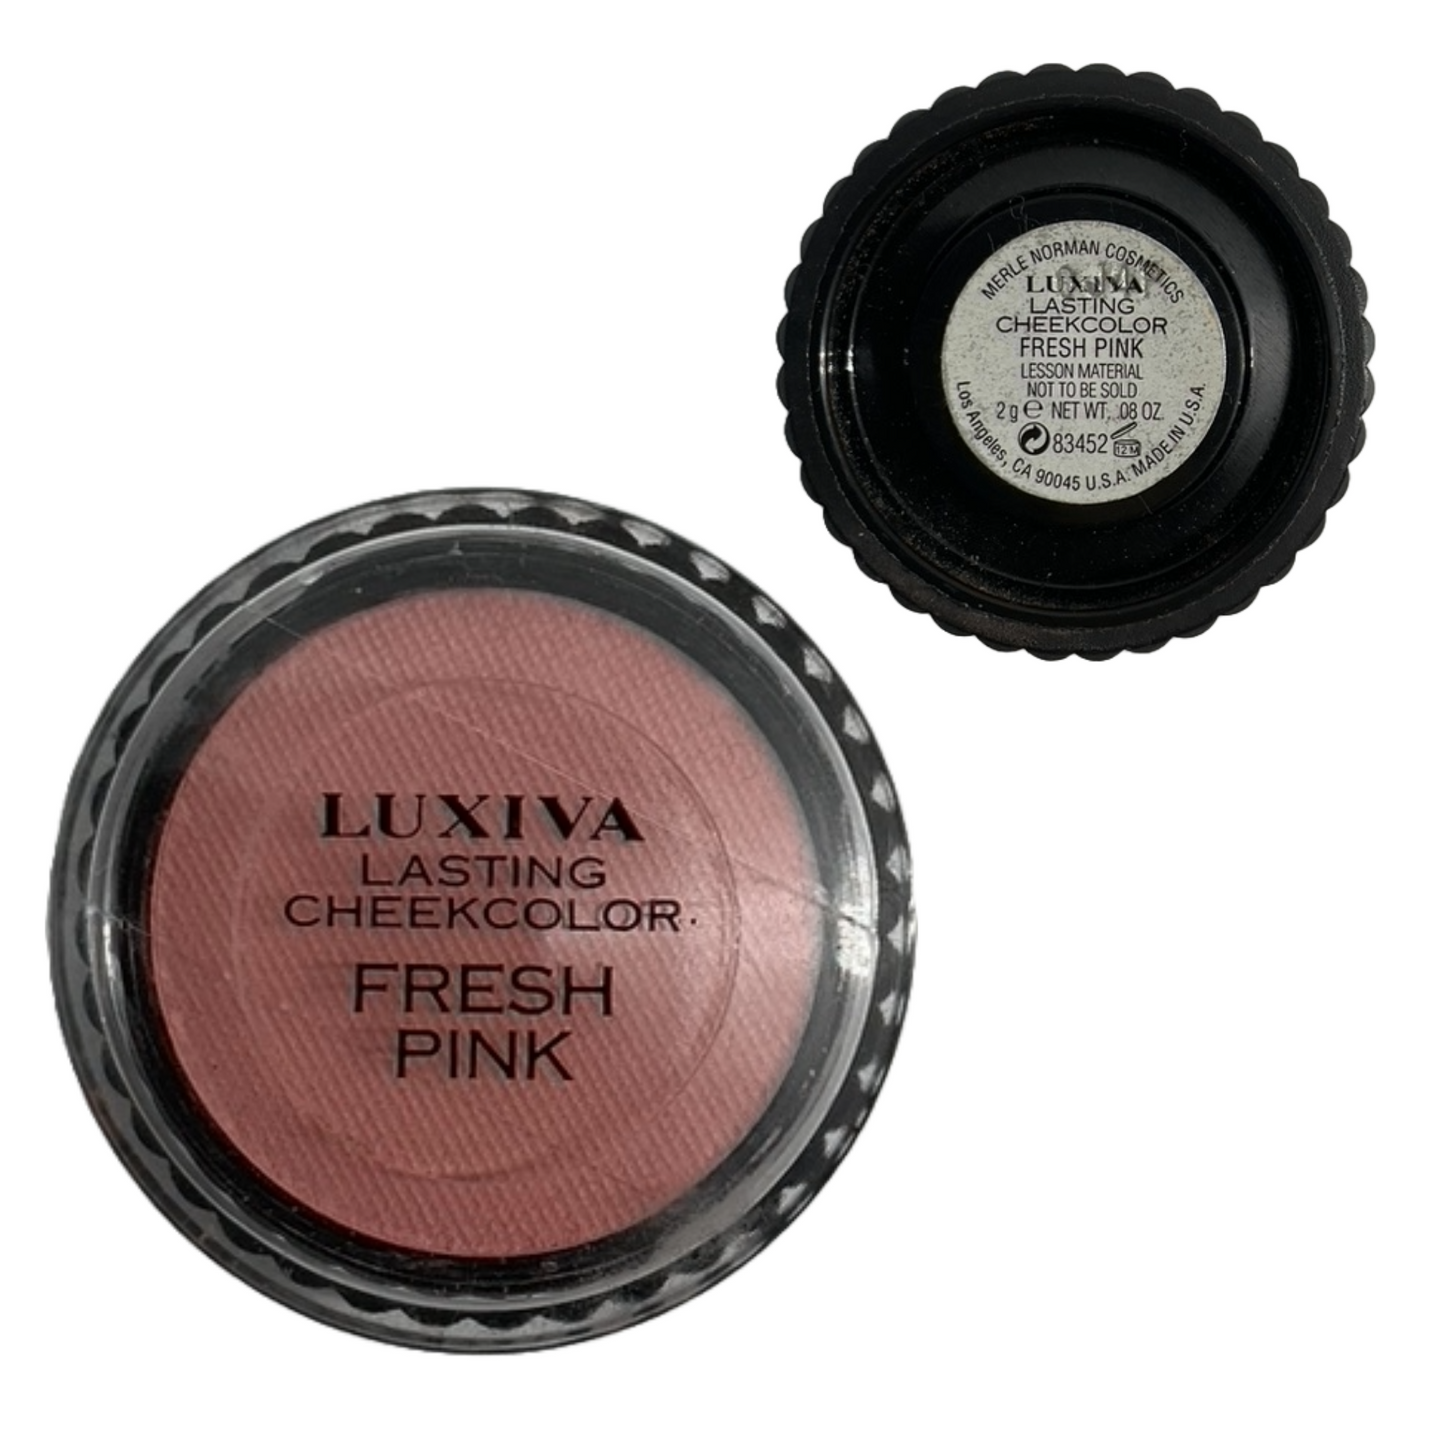 Luxiva lasting cheek color fresh pink 0.8 oz